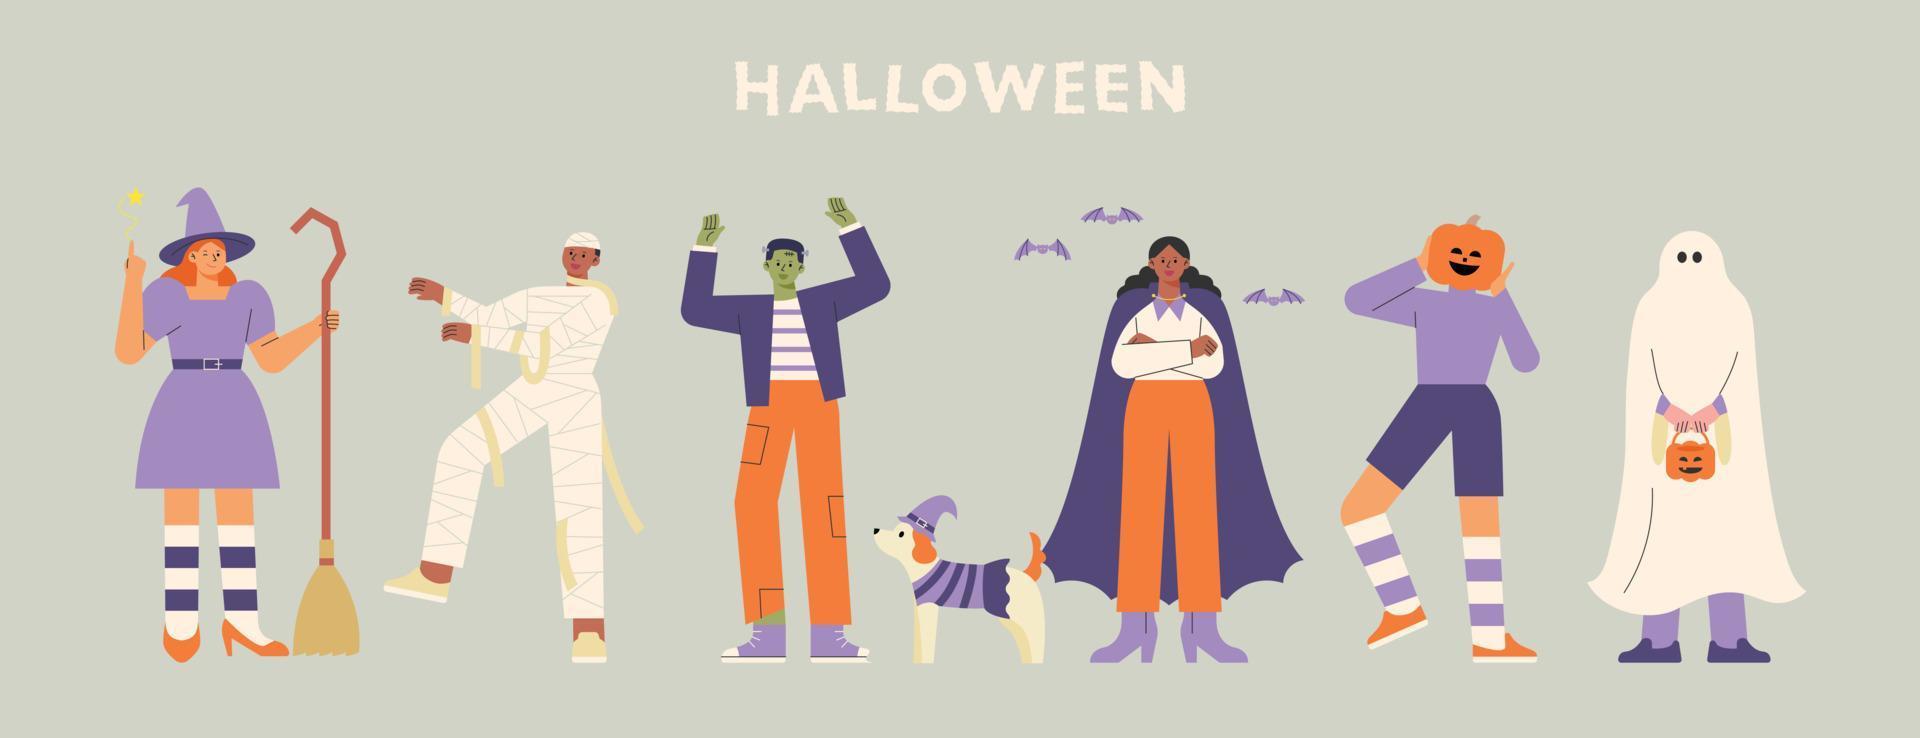 människor i halloween kostymer. häxa, mamma, zombie, vampyr, Pumpalykta, spöke. vektor